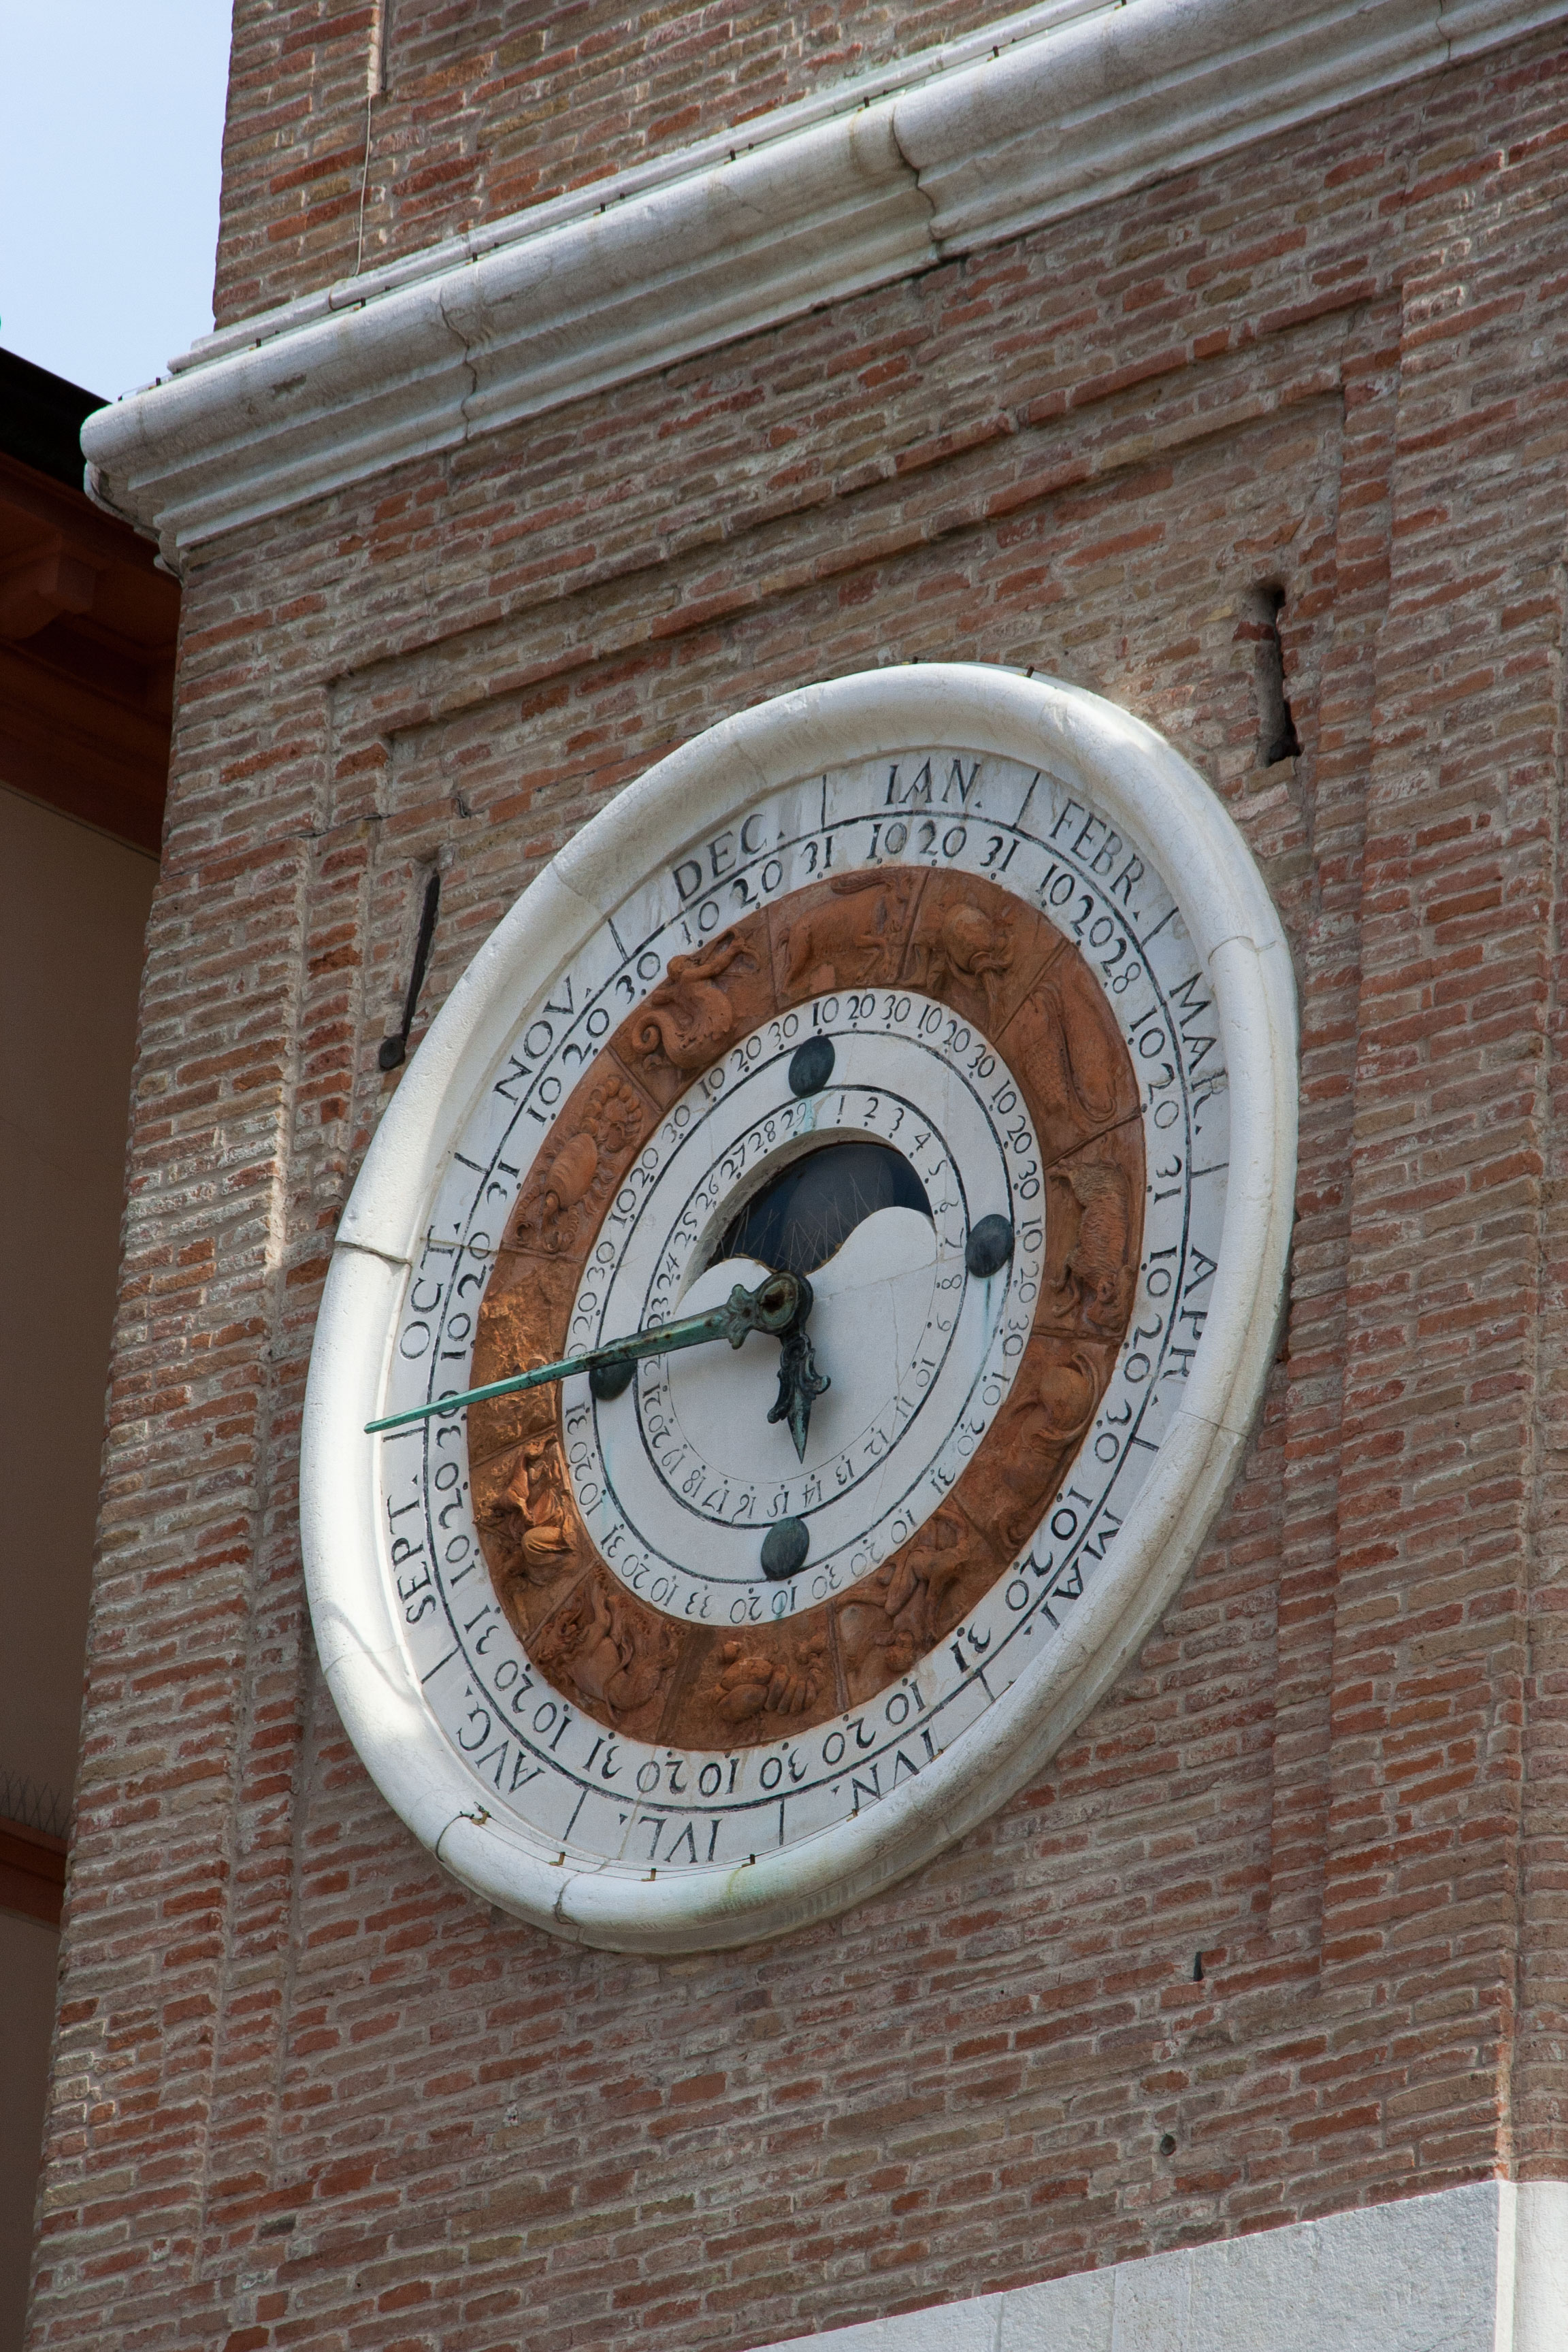 foto: https://upload.wikimedia.org/wikipedia/commons/5/58/Torre-dellorologio-rimini-01.jpg